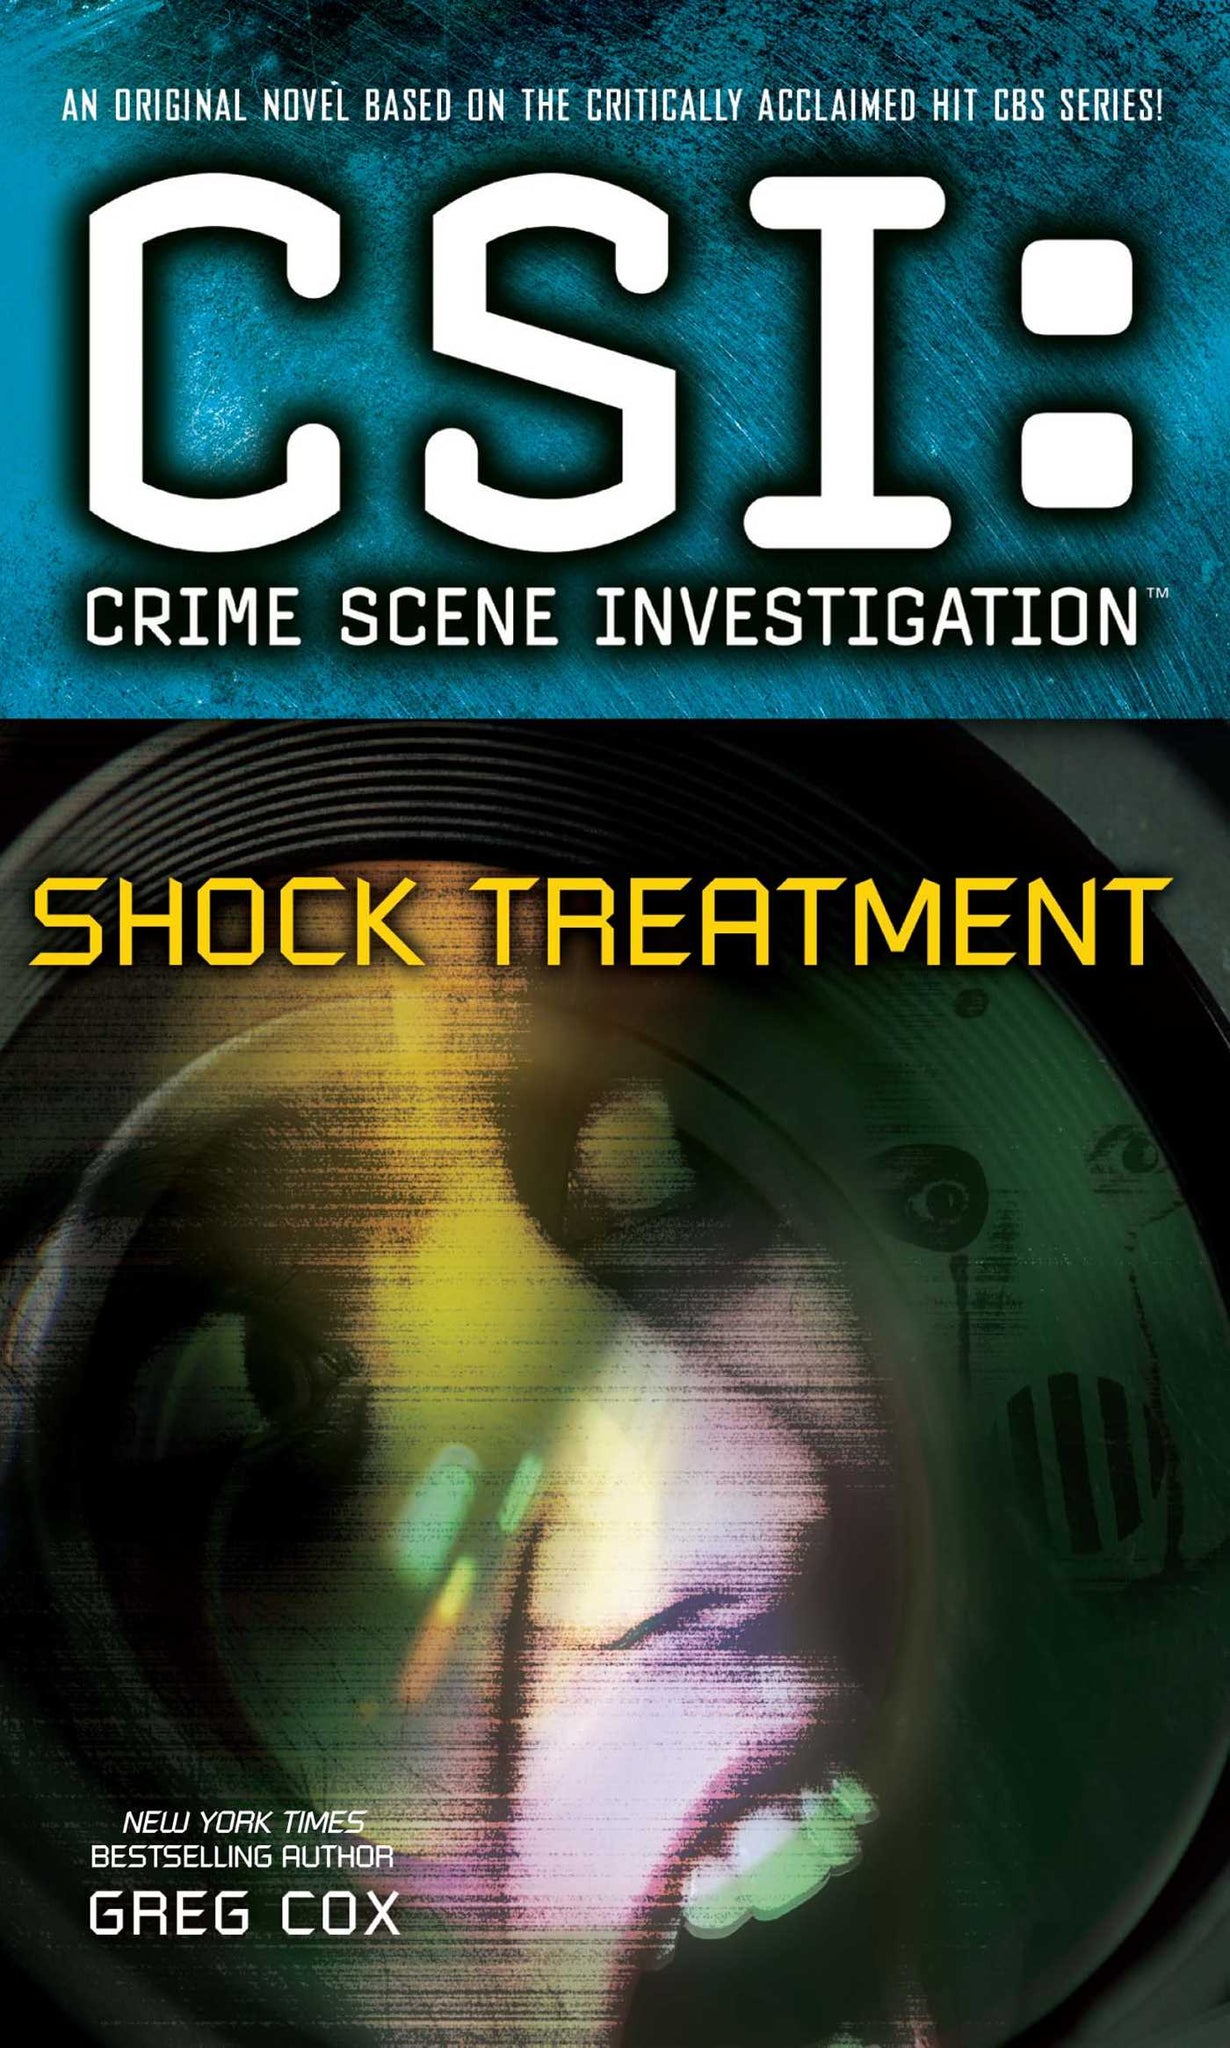 CSI: Crime Scene Investigation: Shock Treatment